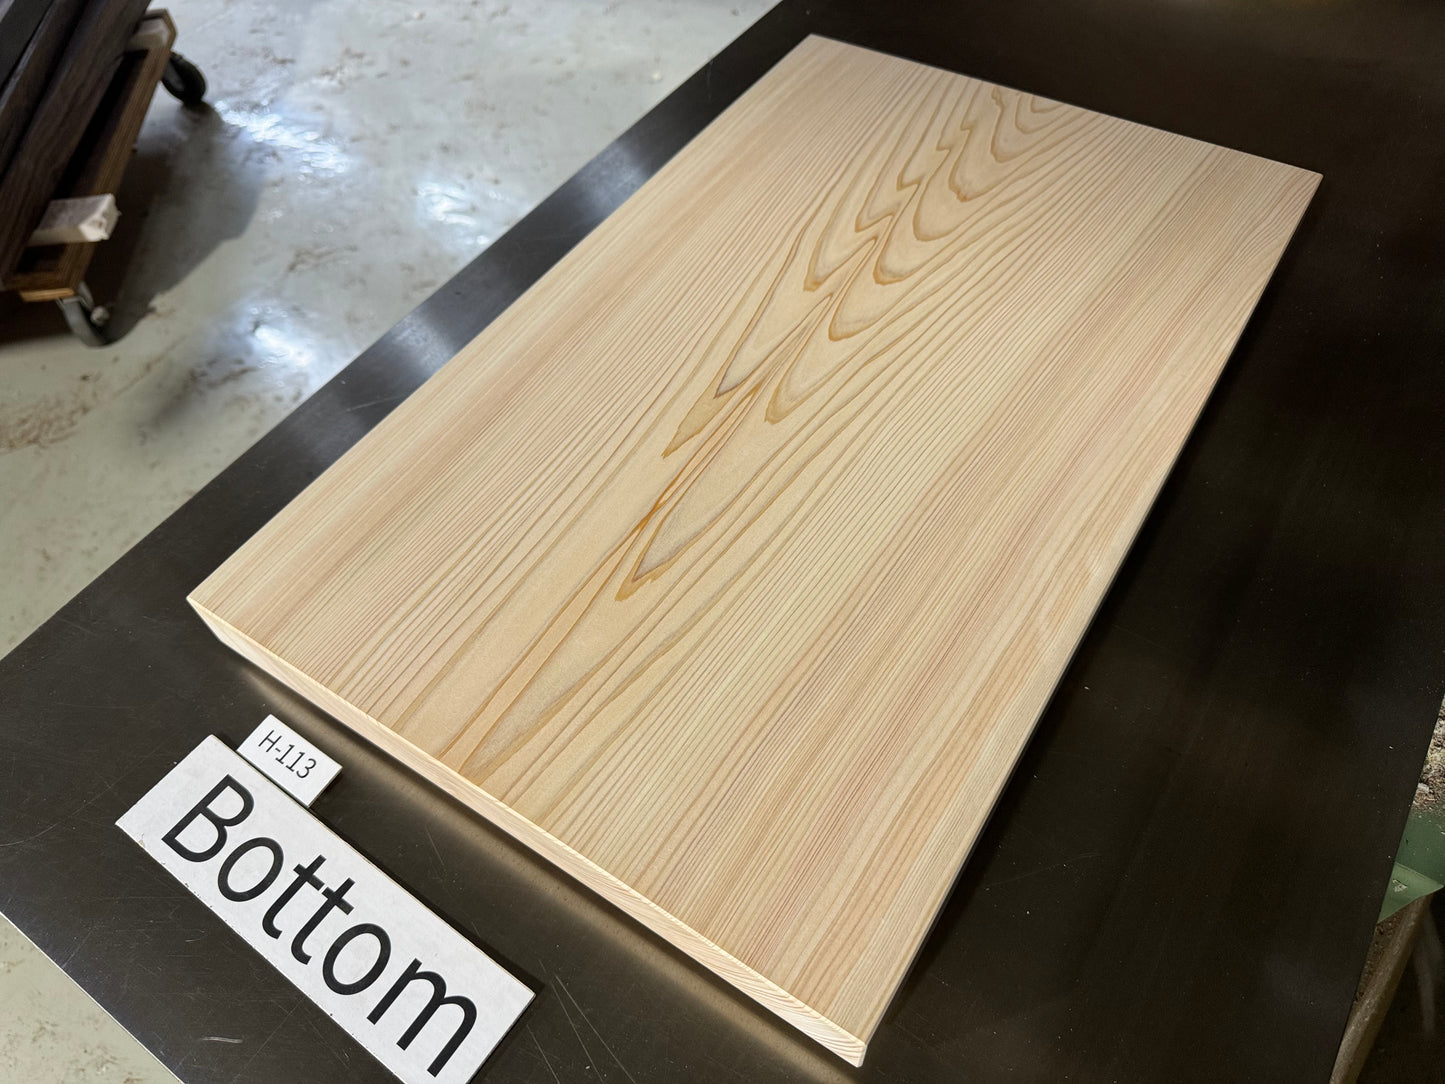 HINOKI cutting board  （Japanese Cypress）  No,H-113